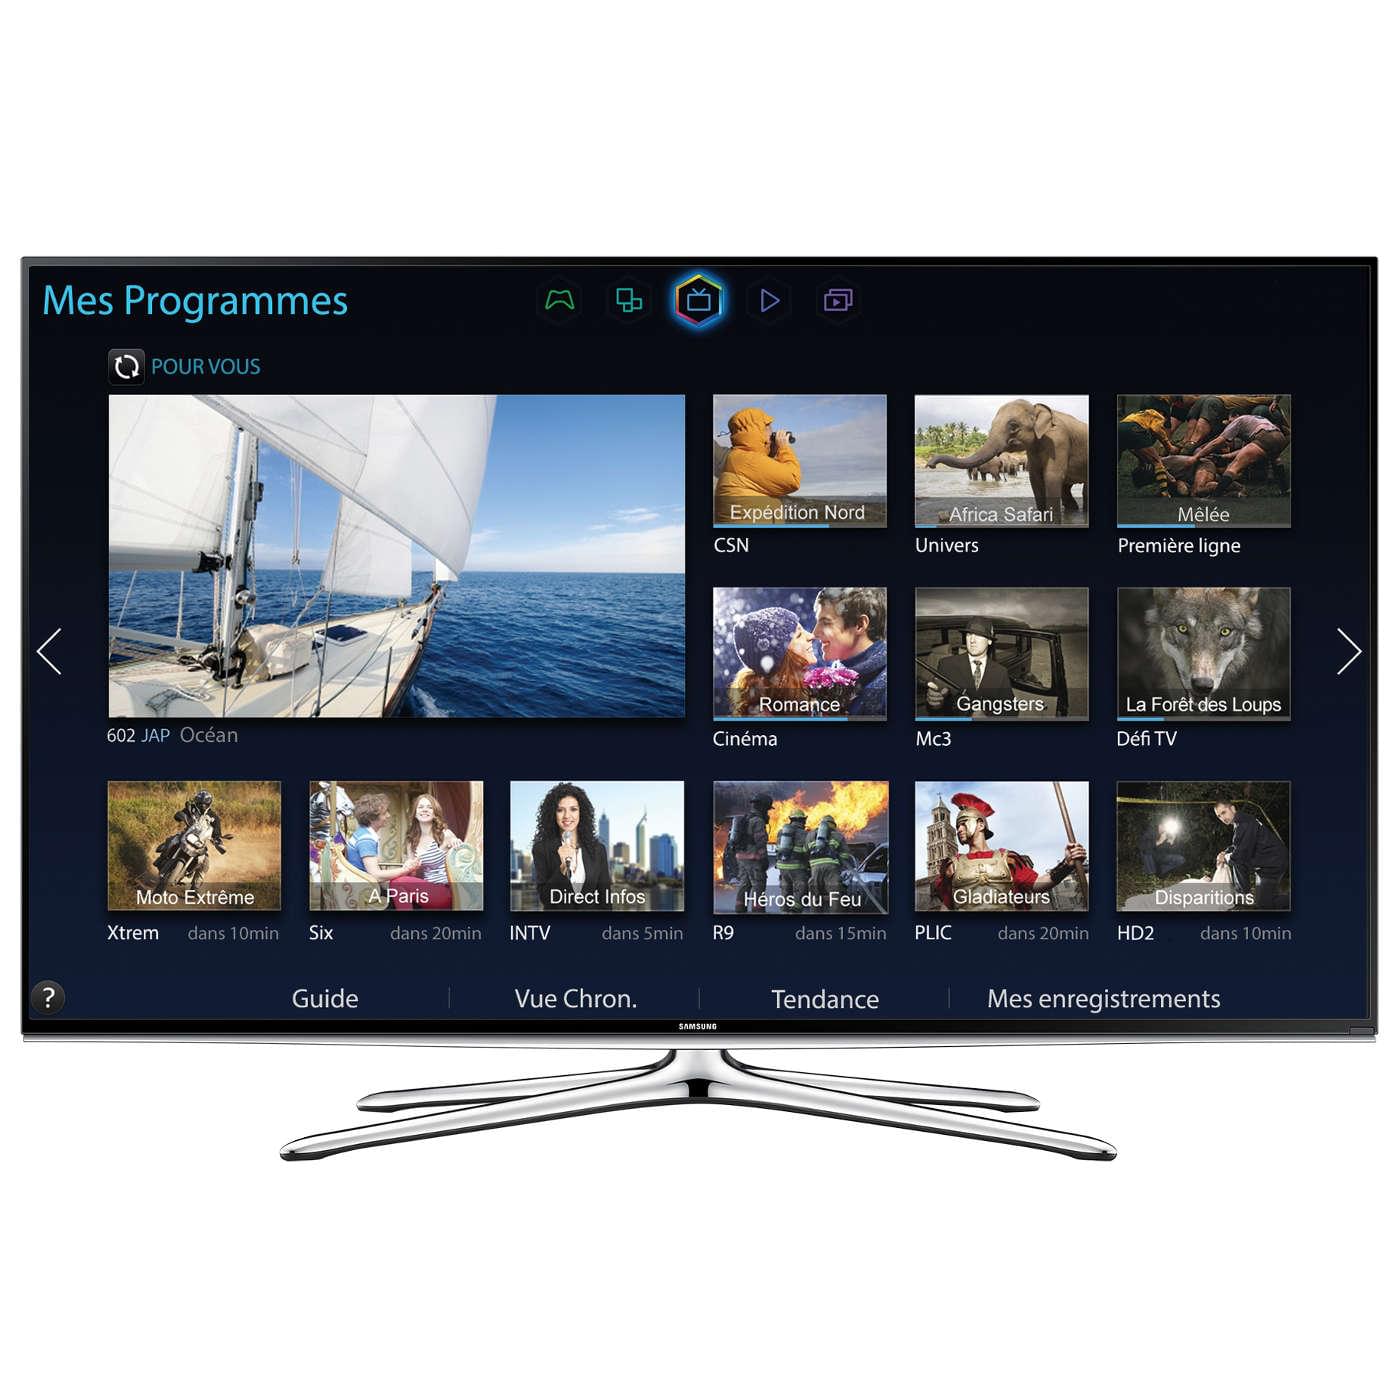 TV Samsung UE40H6200 - 40" (102cm) LED HDTV 1080p 3D 200Hz